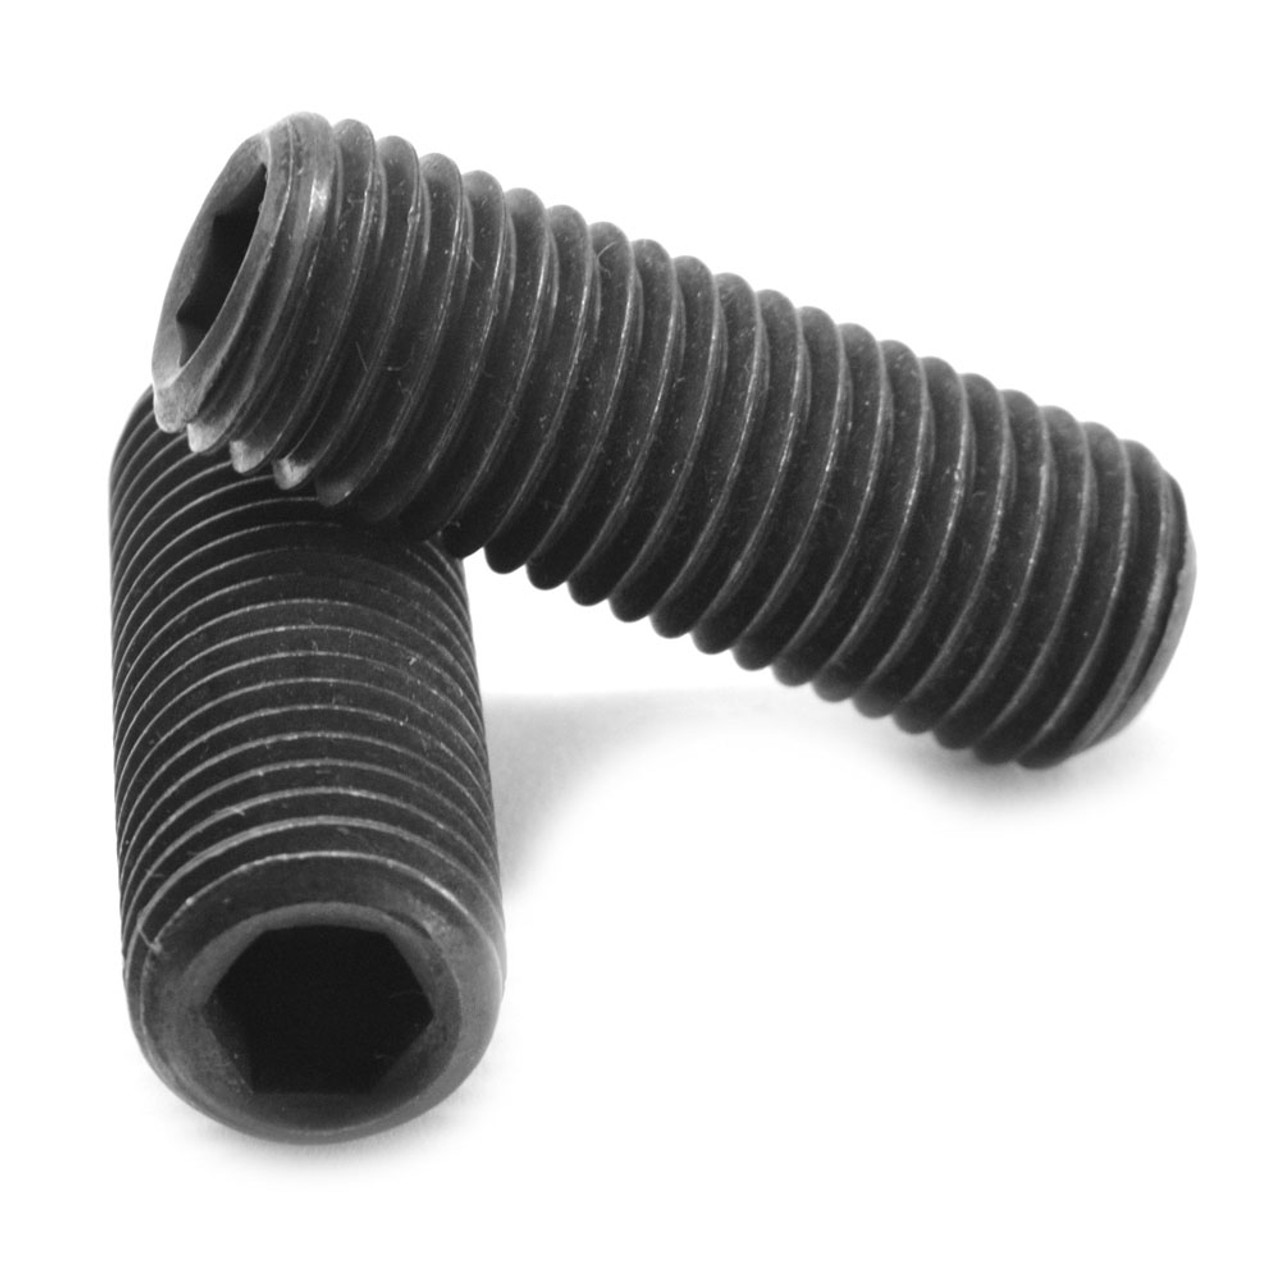 M20 x 2.50 x 55 MM Coarse Thread ISO 4029 / DIN 916 Class 45H Socket Set Screw Cup Point Alloy Steel Black Oxide